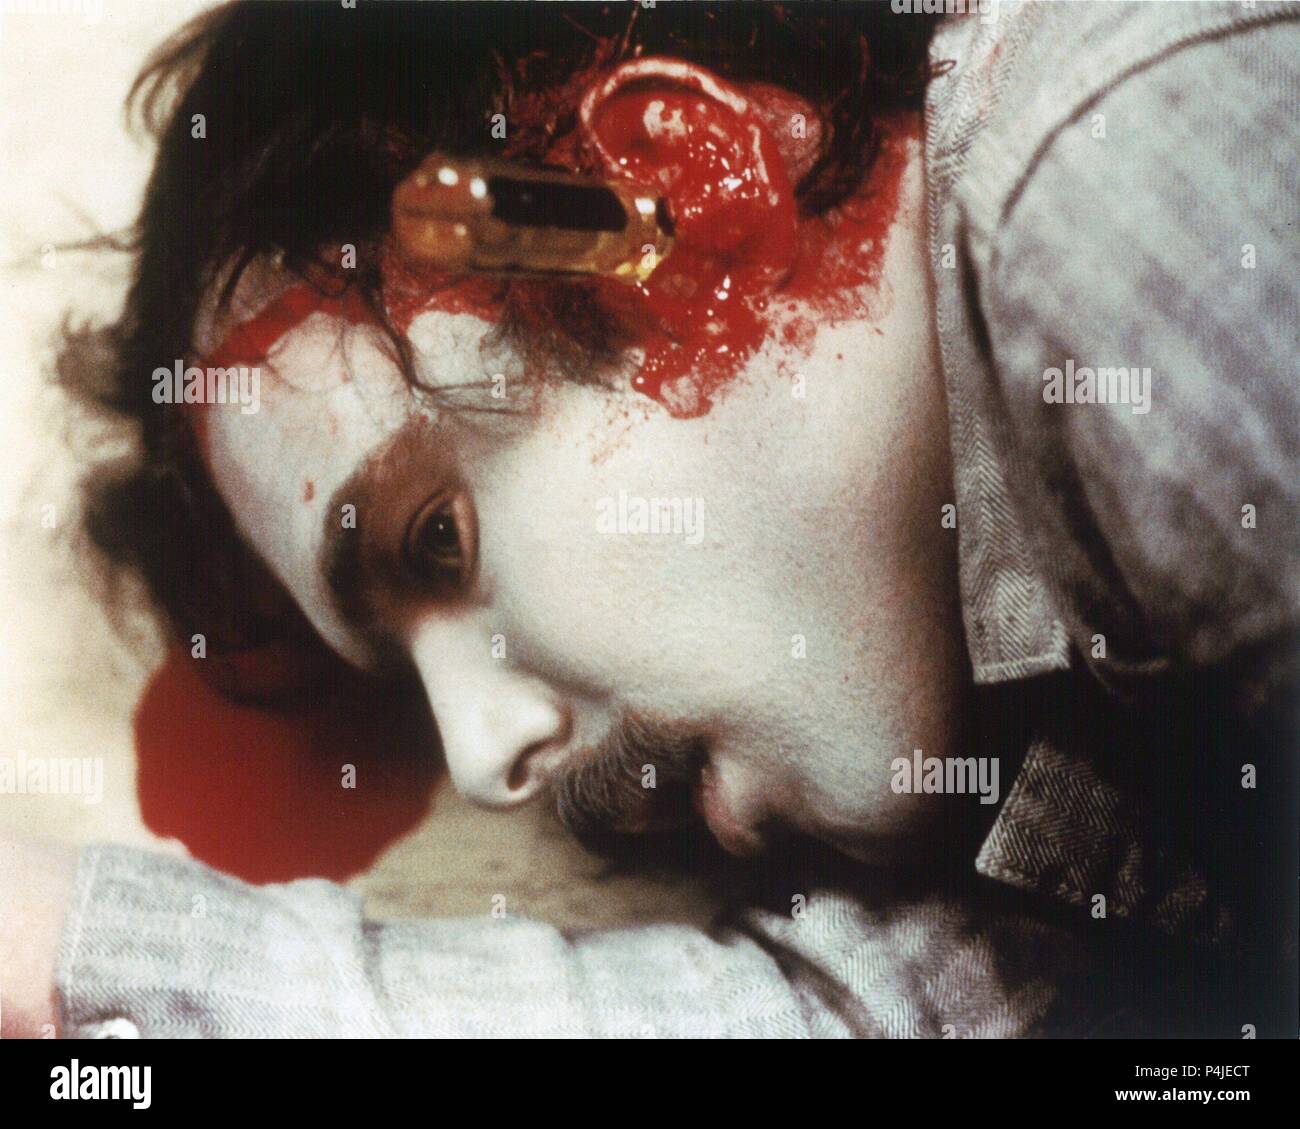 Original Film Title: DAWN OF THE DEAD.  English Title: DAWN OF THE DEAD.  Film Director: GEORGE A. ROMERO.  Year: 1978. Credit: UNITED FILM / Album Stock Photo